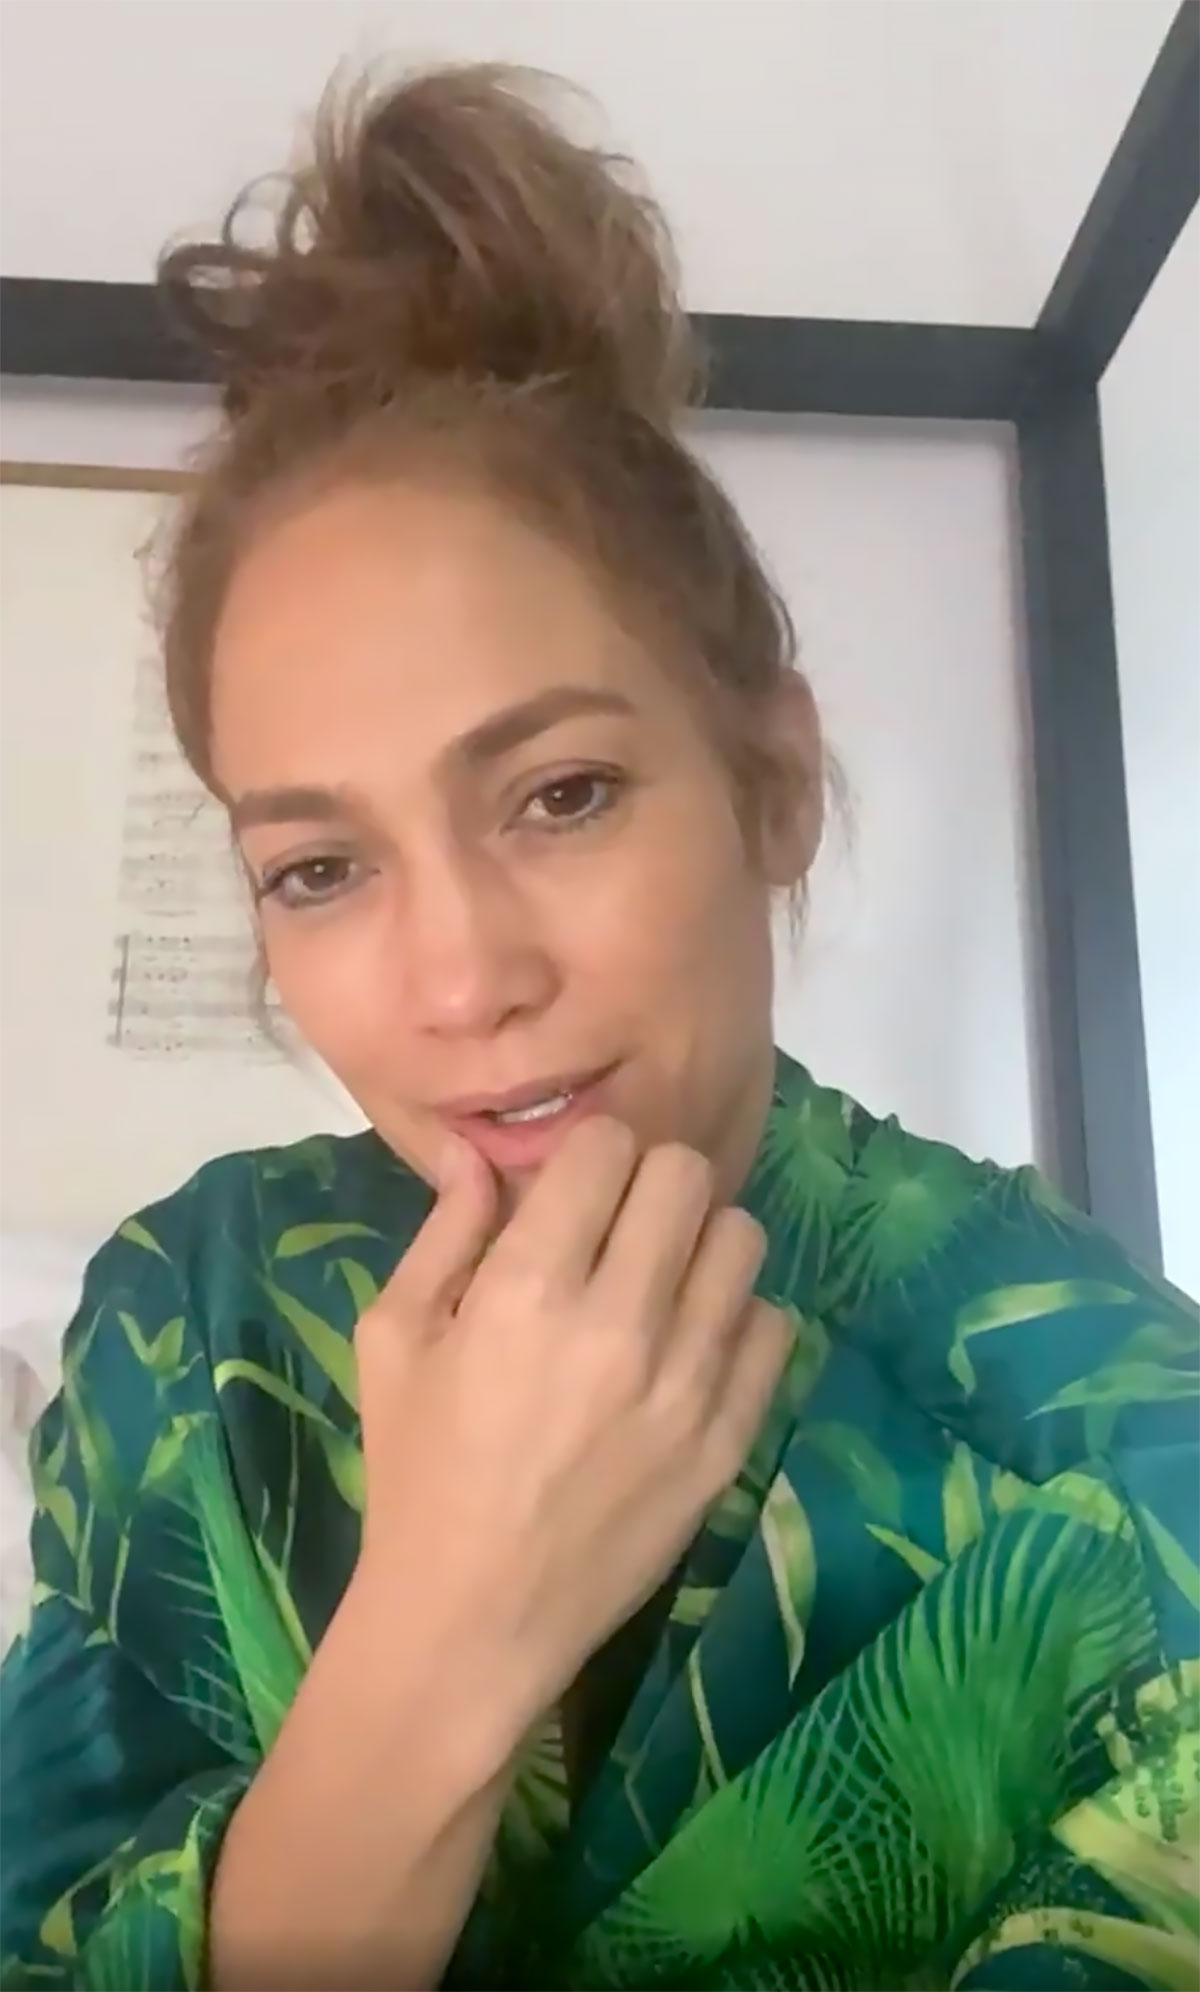 JLo looks unrecognizable in makeup-free morning selfie